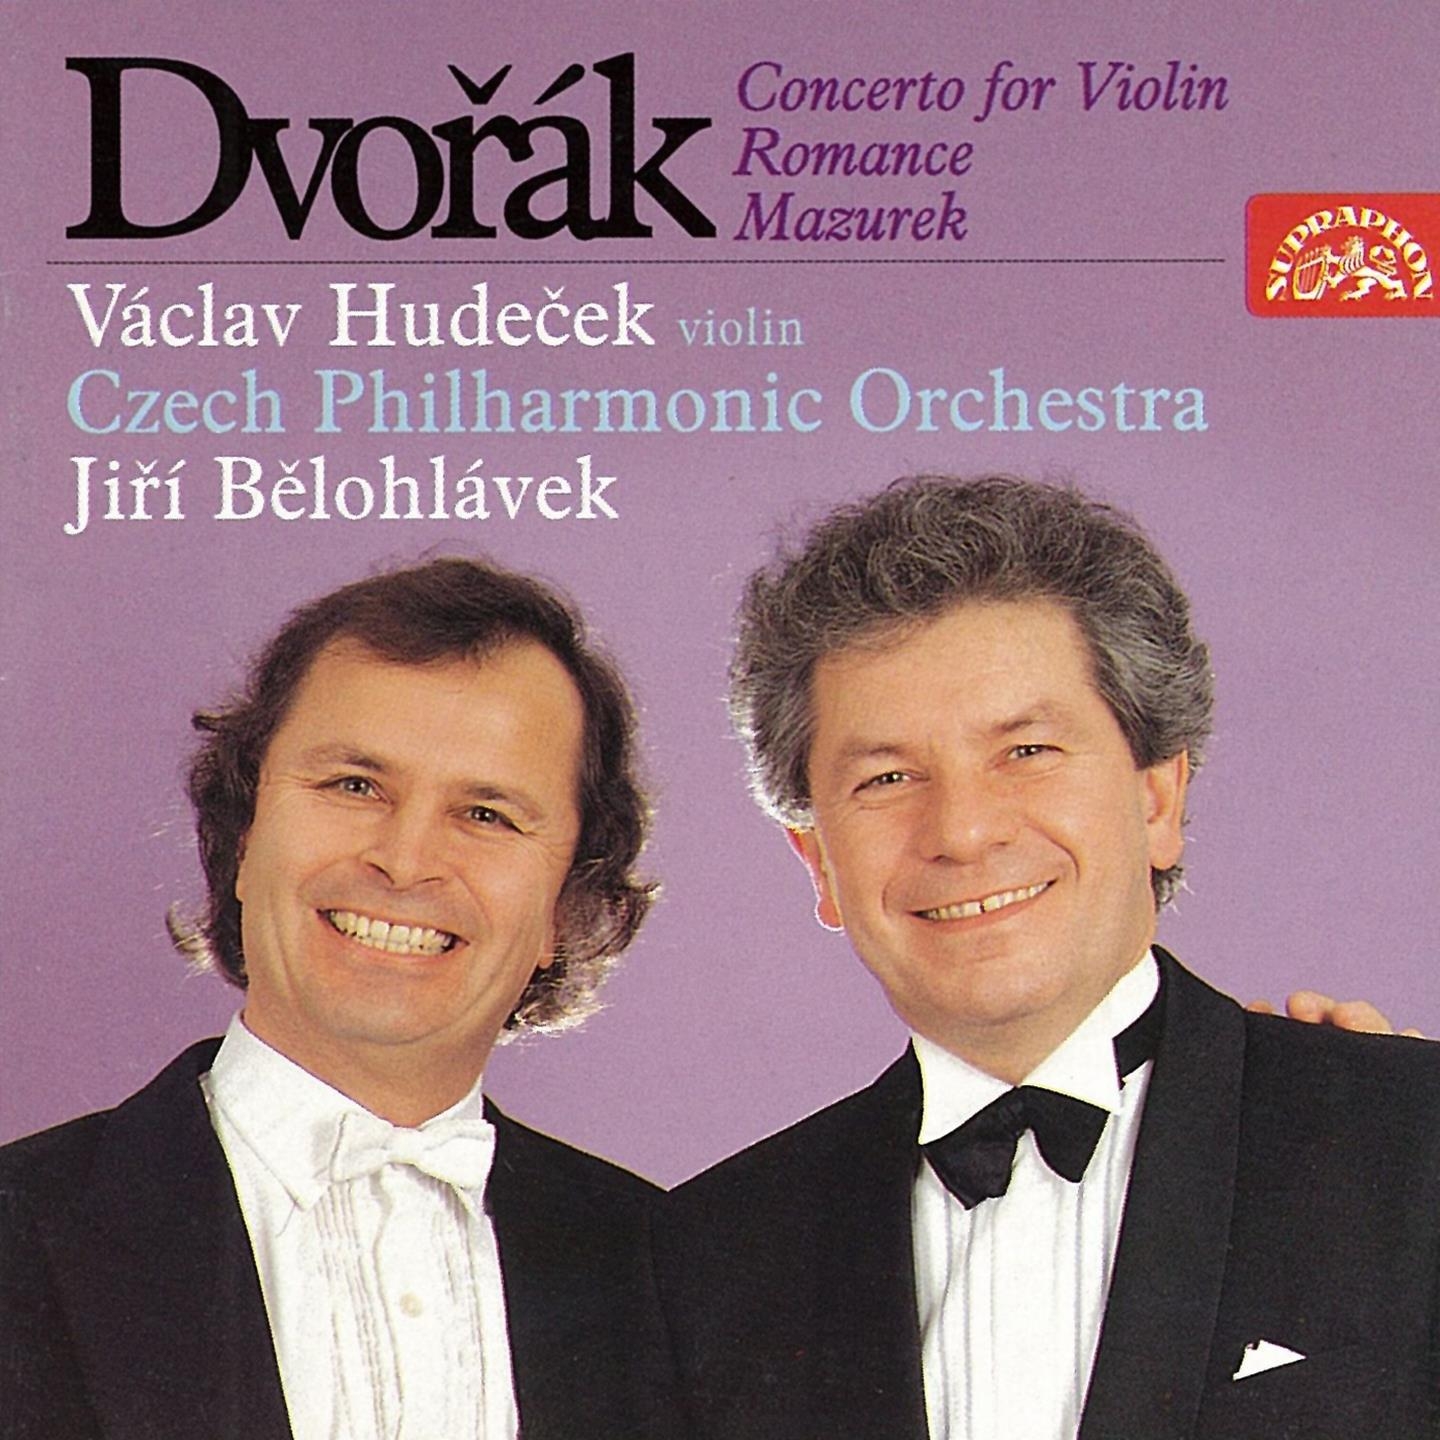 Dvoa k: Concerto, Romance and Mazurek for Violin and Orchestra